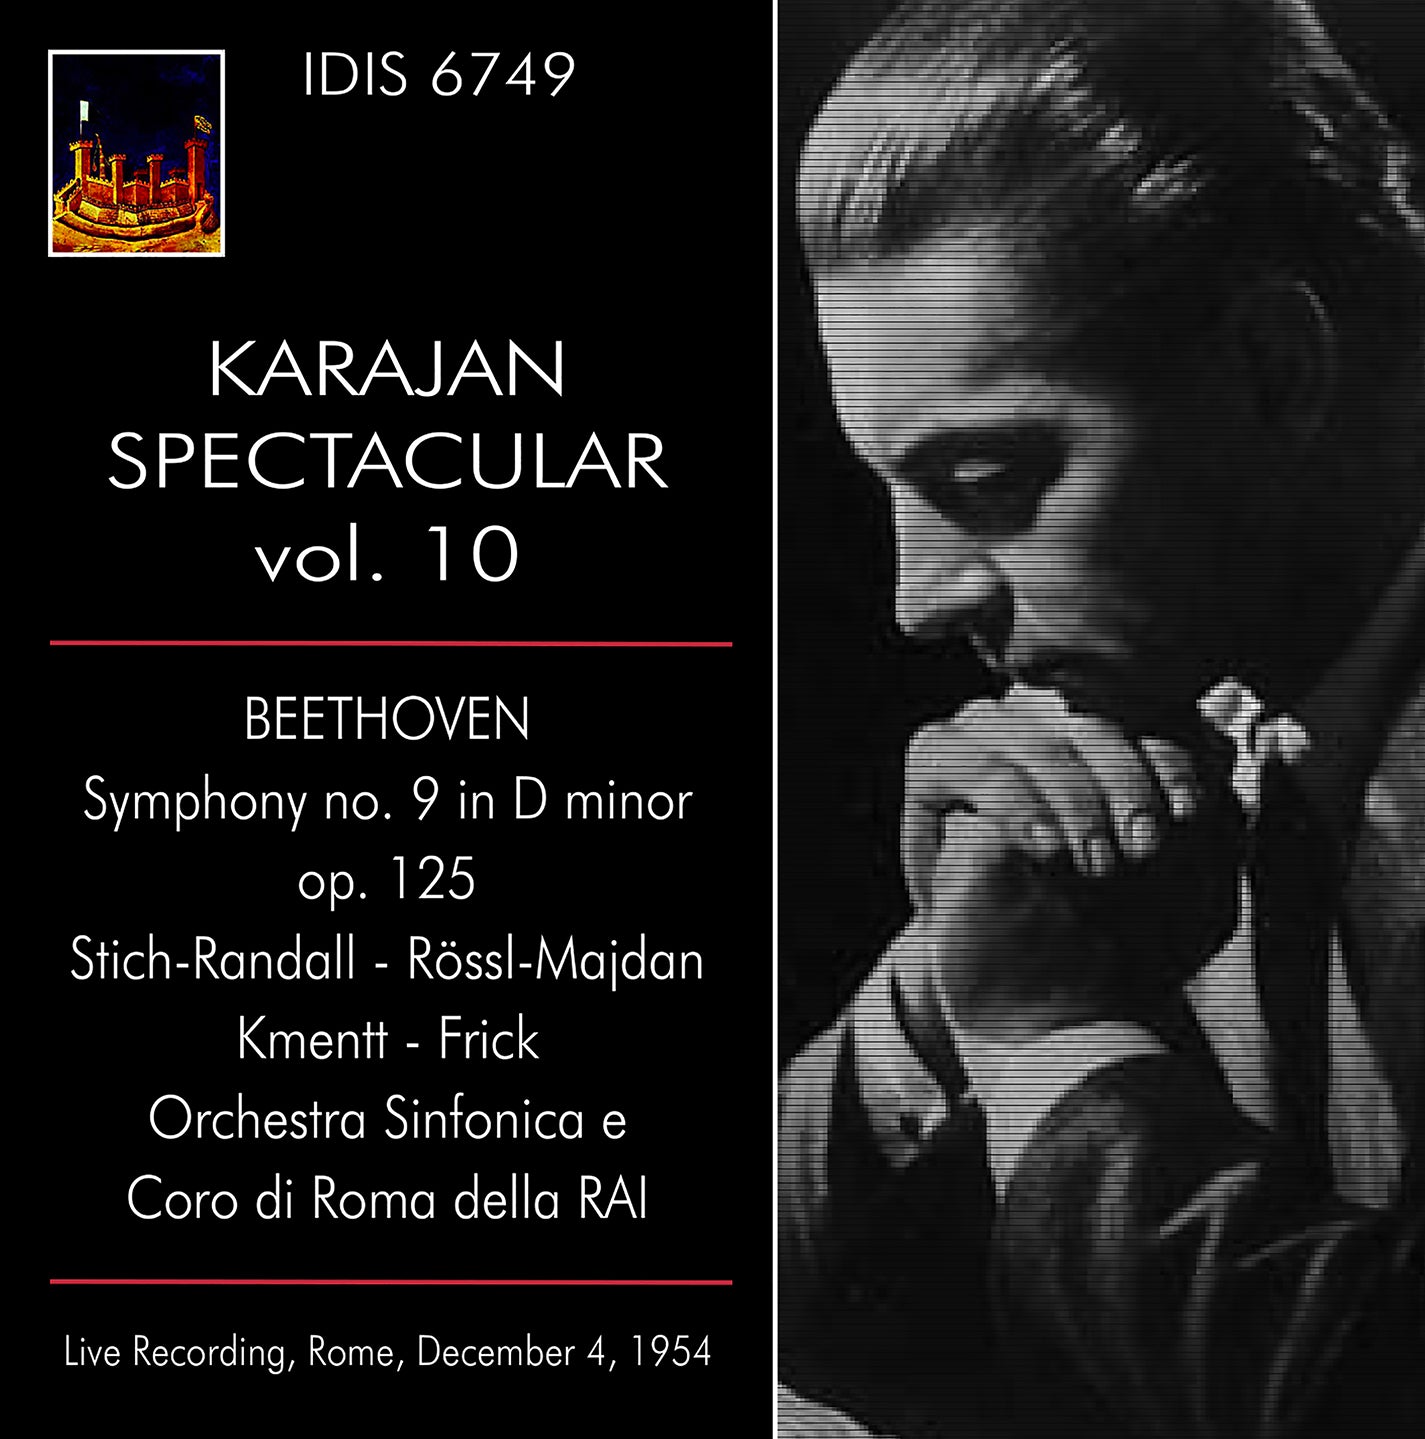 Karajan Spectacular, Vol. 10 - Beethoven's Symphony no. 9 in Rome, 1954